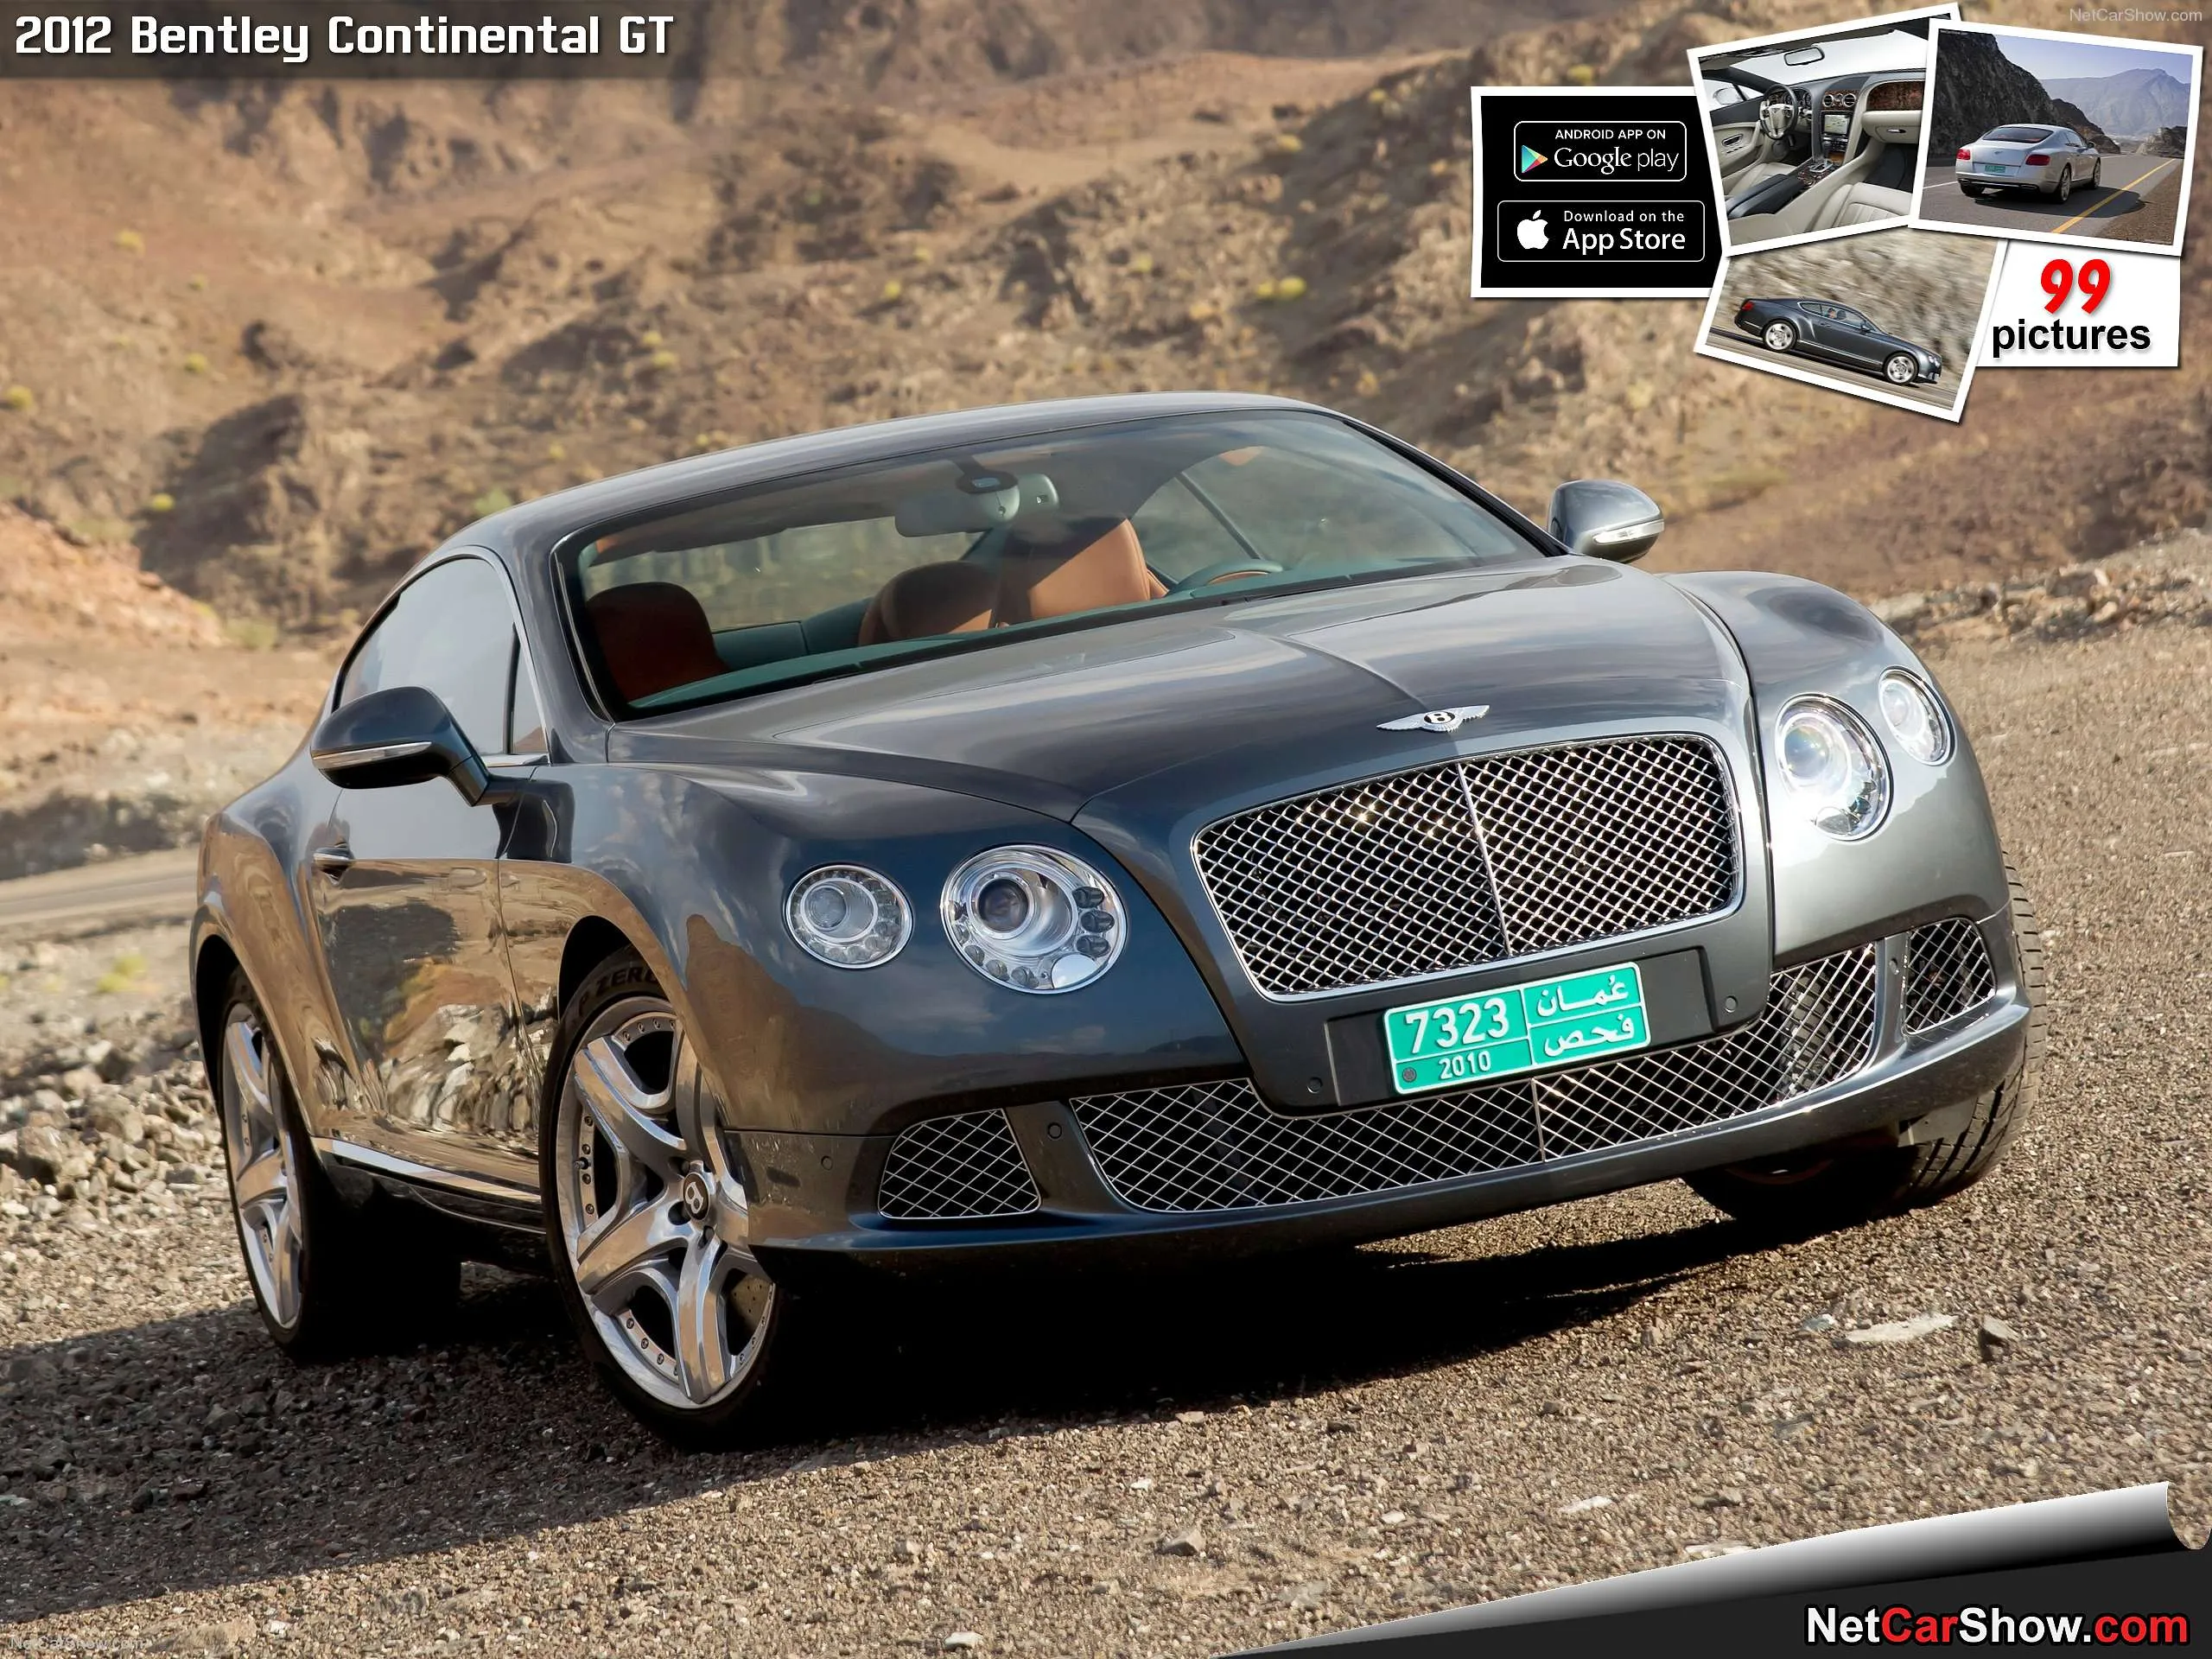 Bentley Continental GT 6.0i 2012 photo - 3